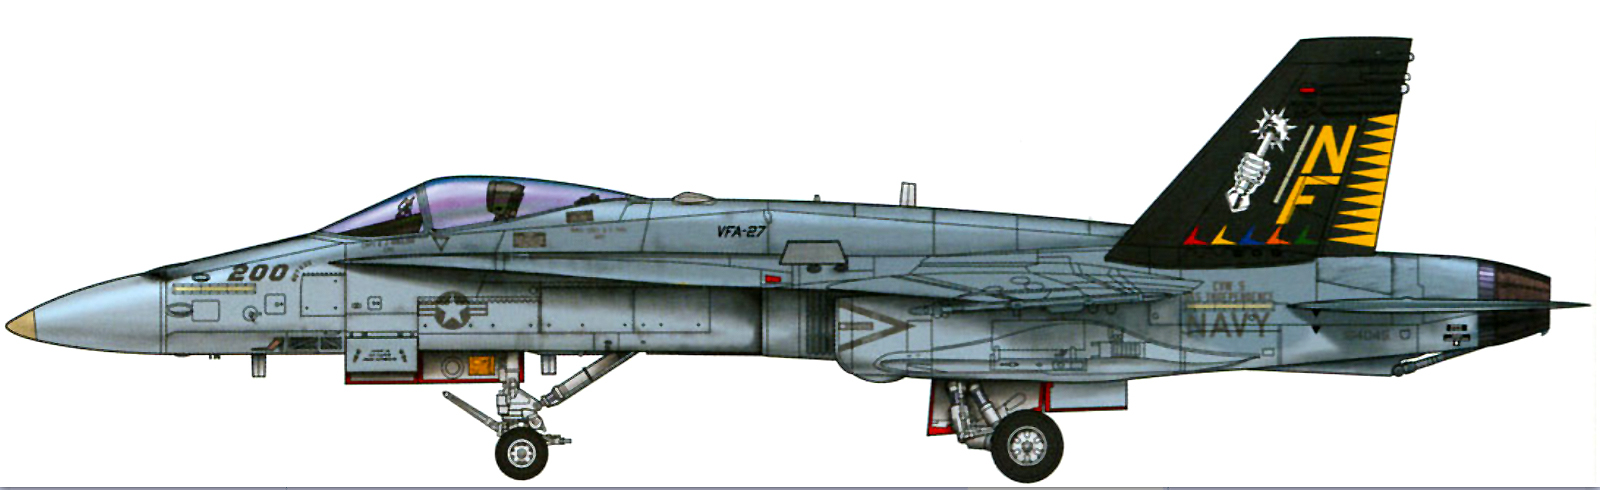 VFA-27